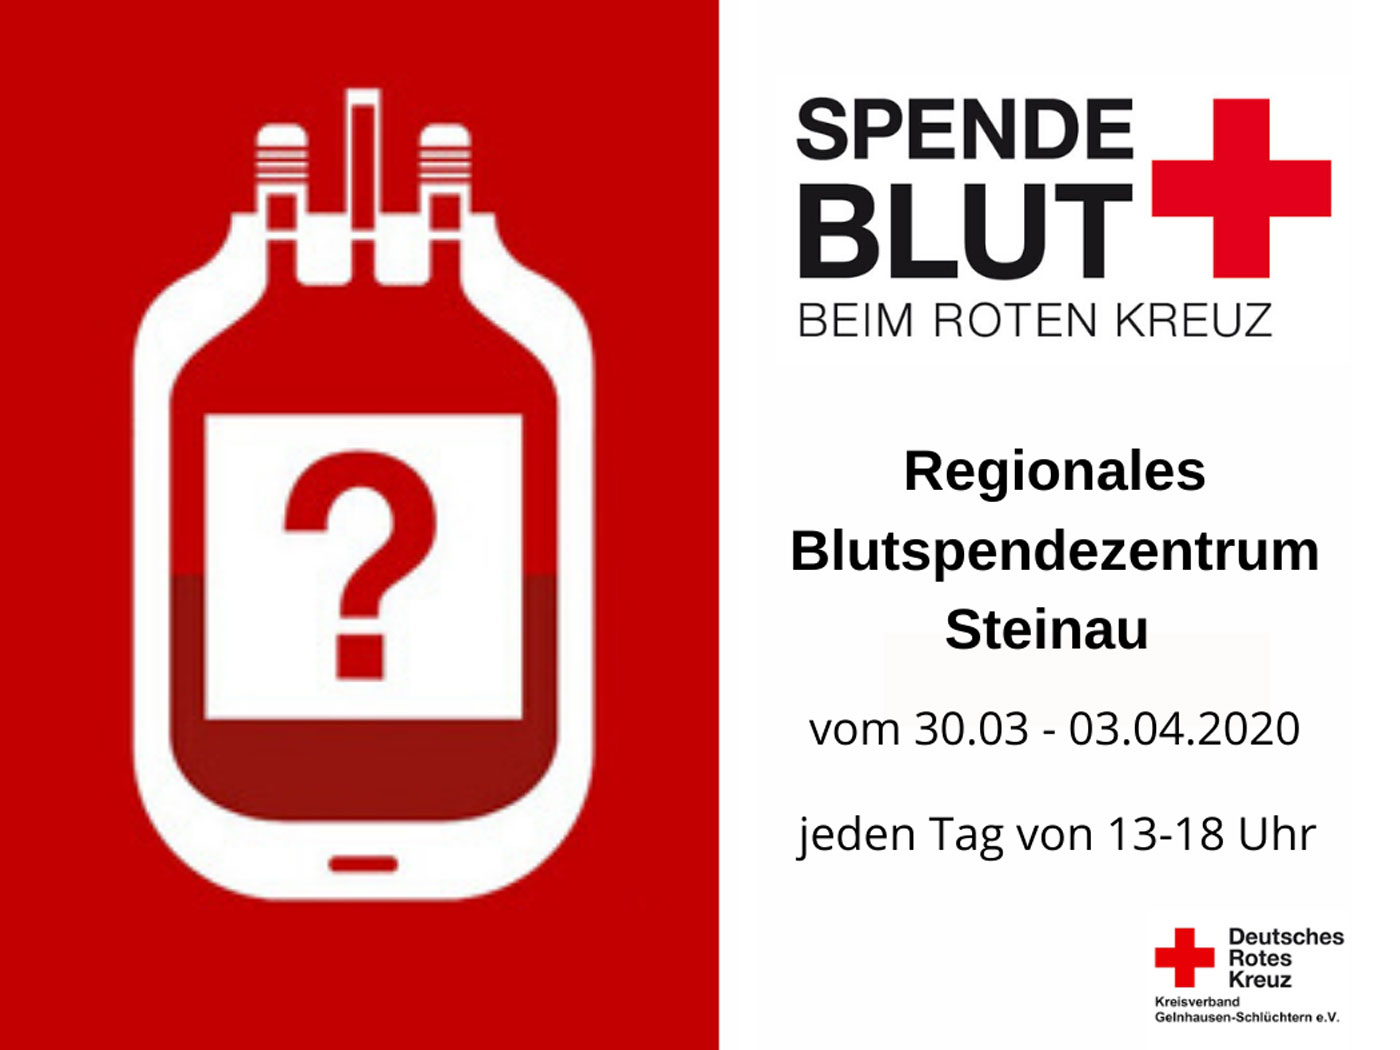 Regionales Blutspendezentrum Steinau